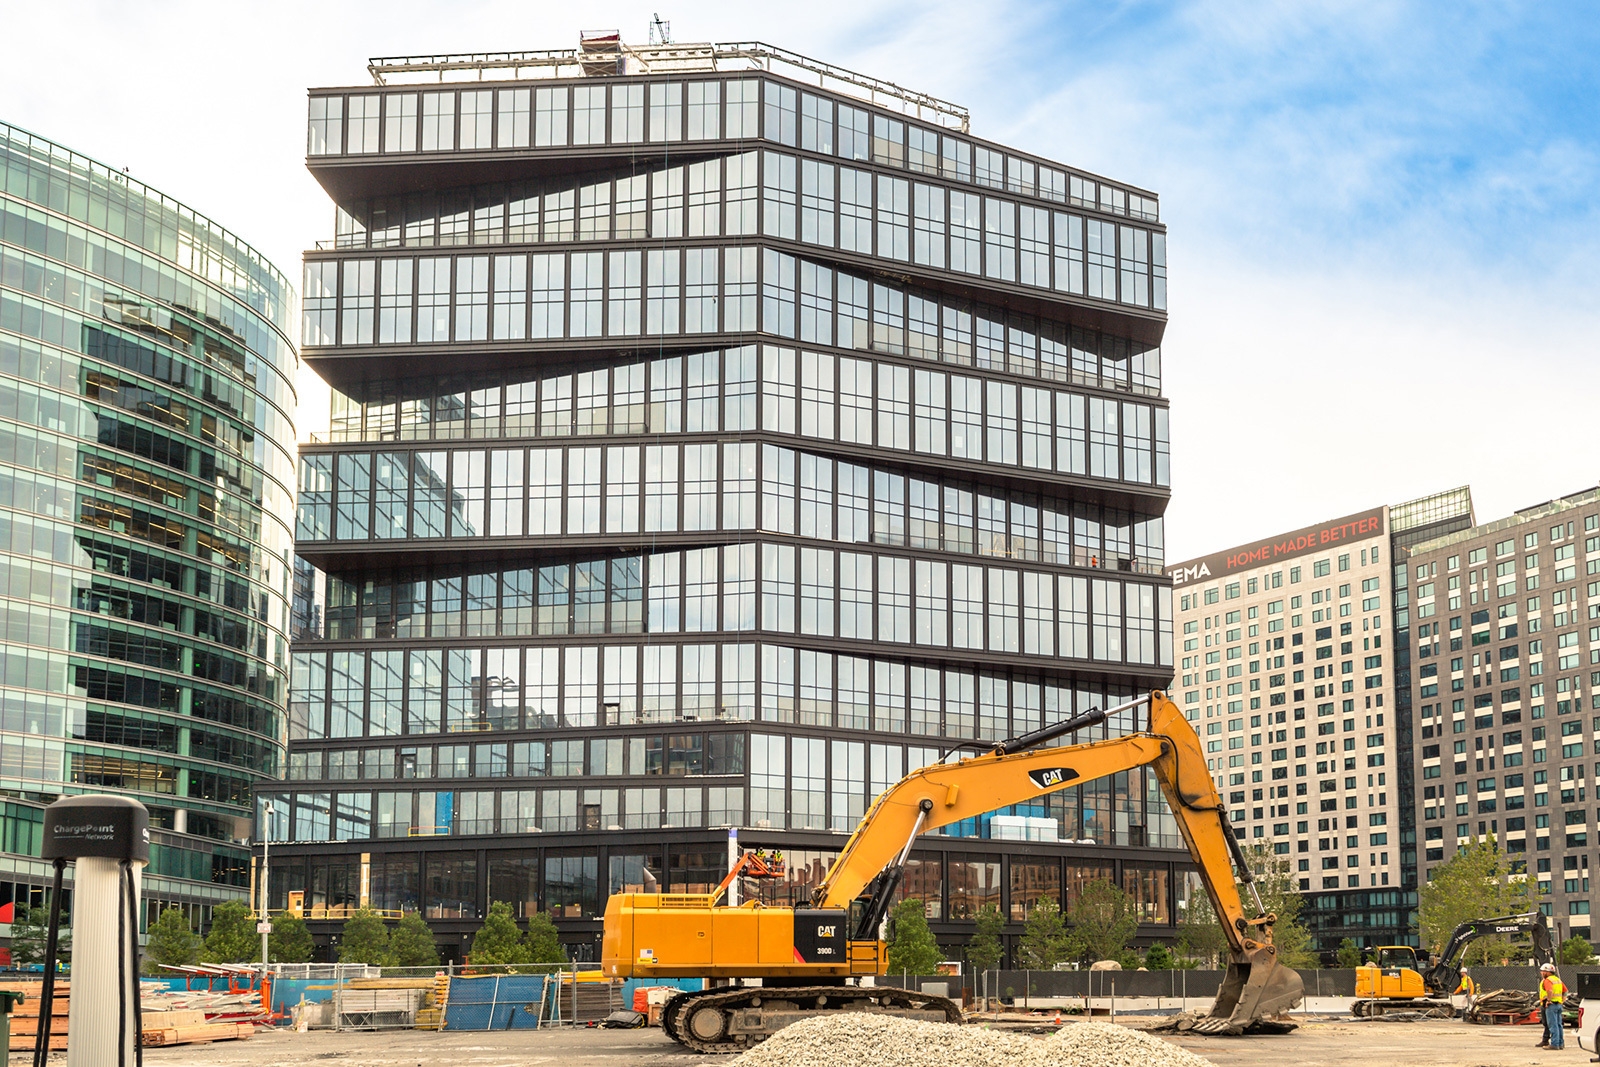 An image of the Amazon office building in Boston, Massachusetts